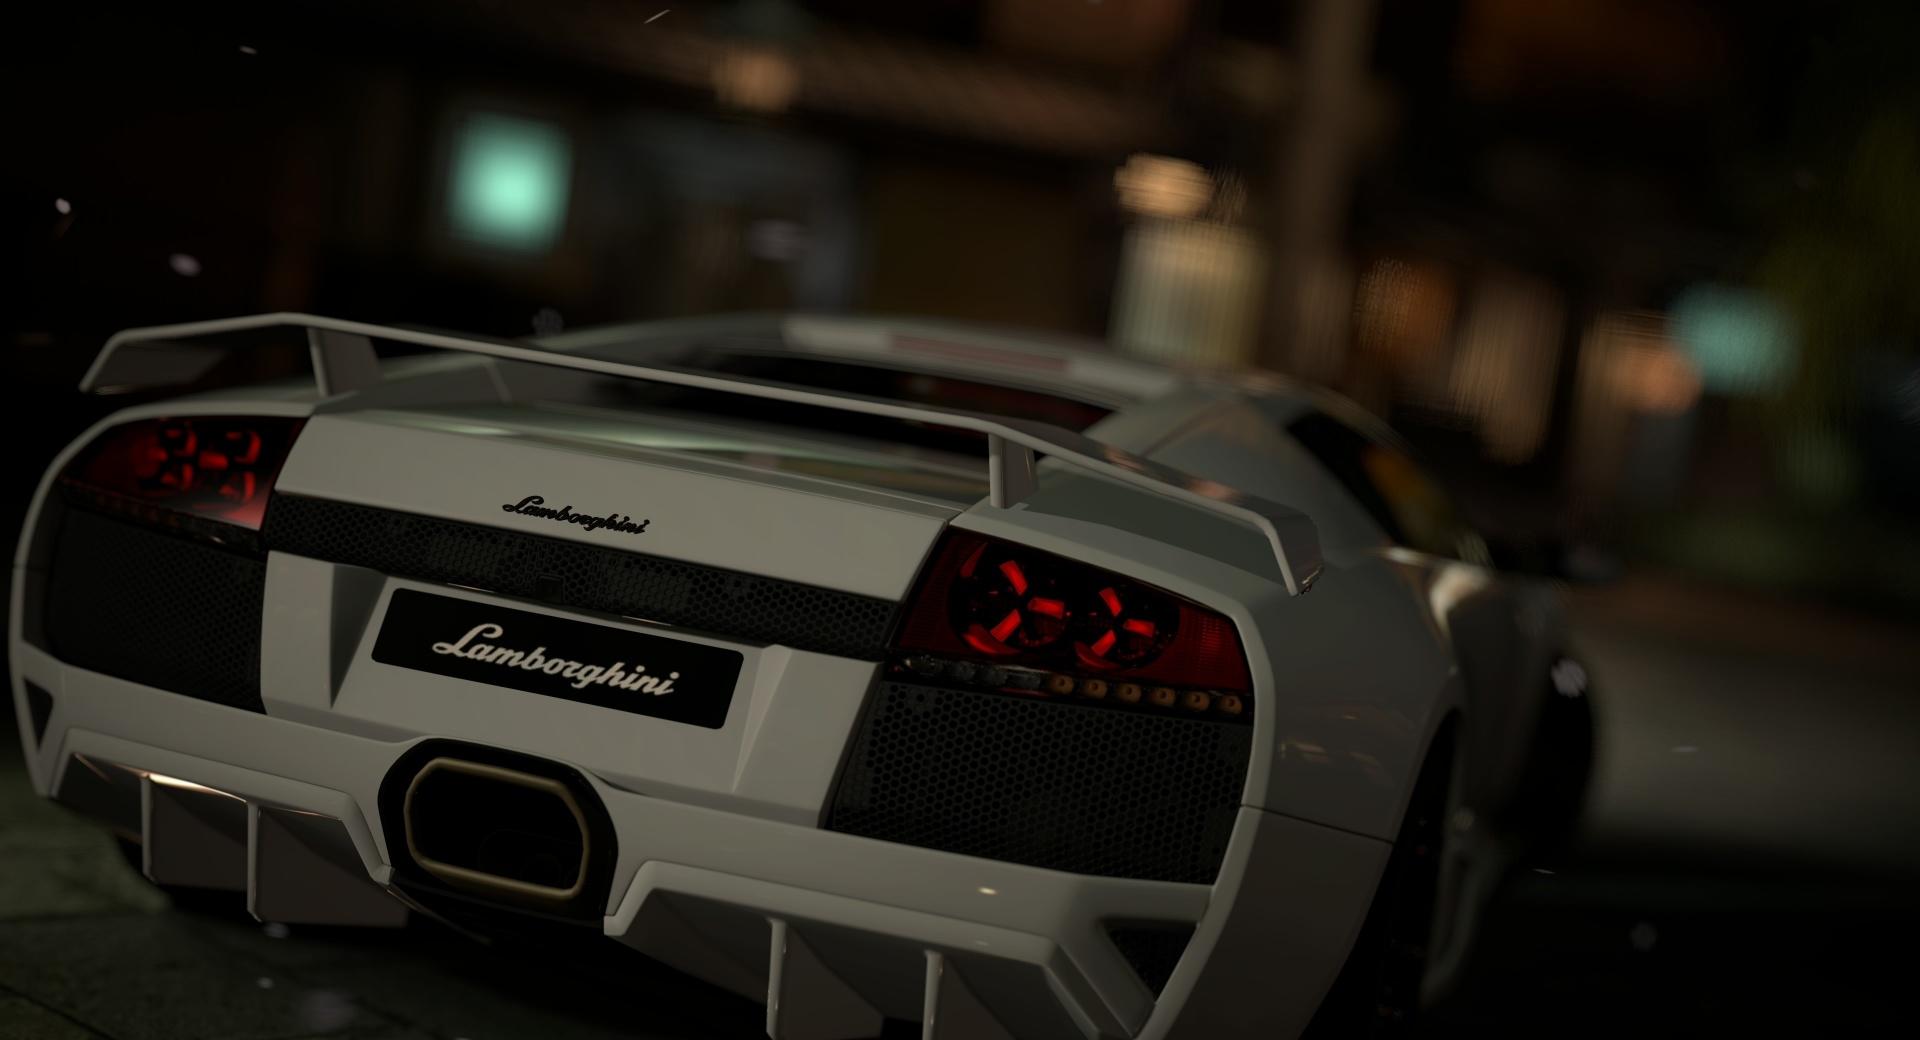 Lamborghini Murcilago Rear at 1280 x 960 size wallpapers HD quality